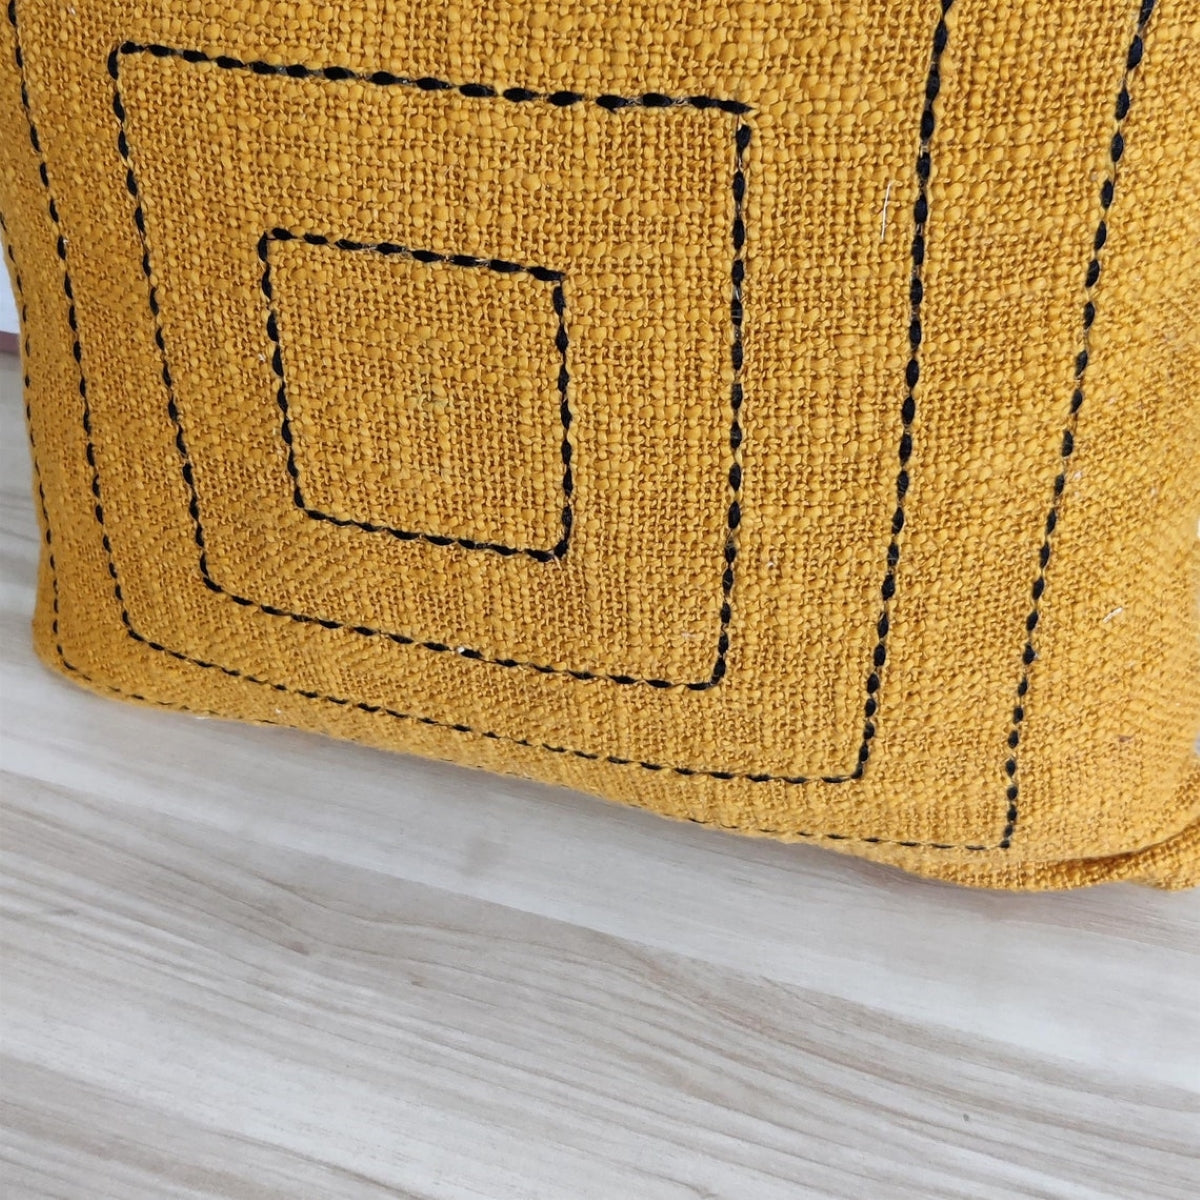 Mustard Yellow Kantha Square Design Cushion Cover